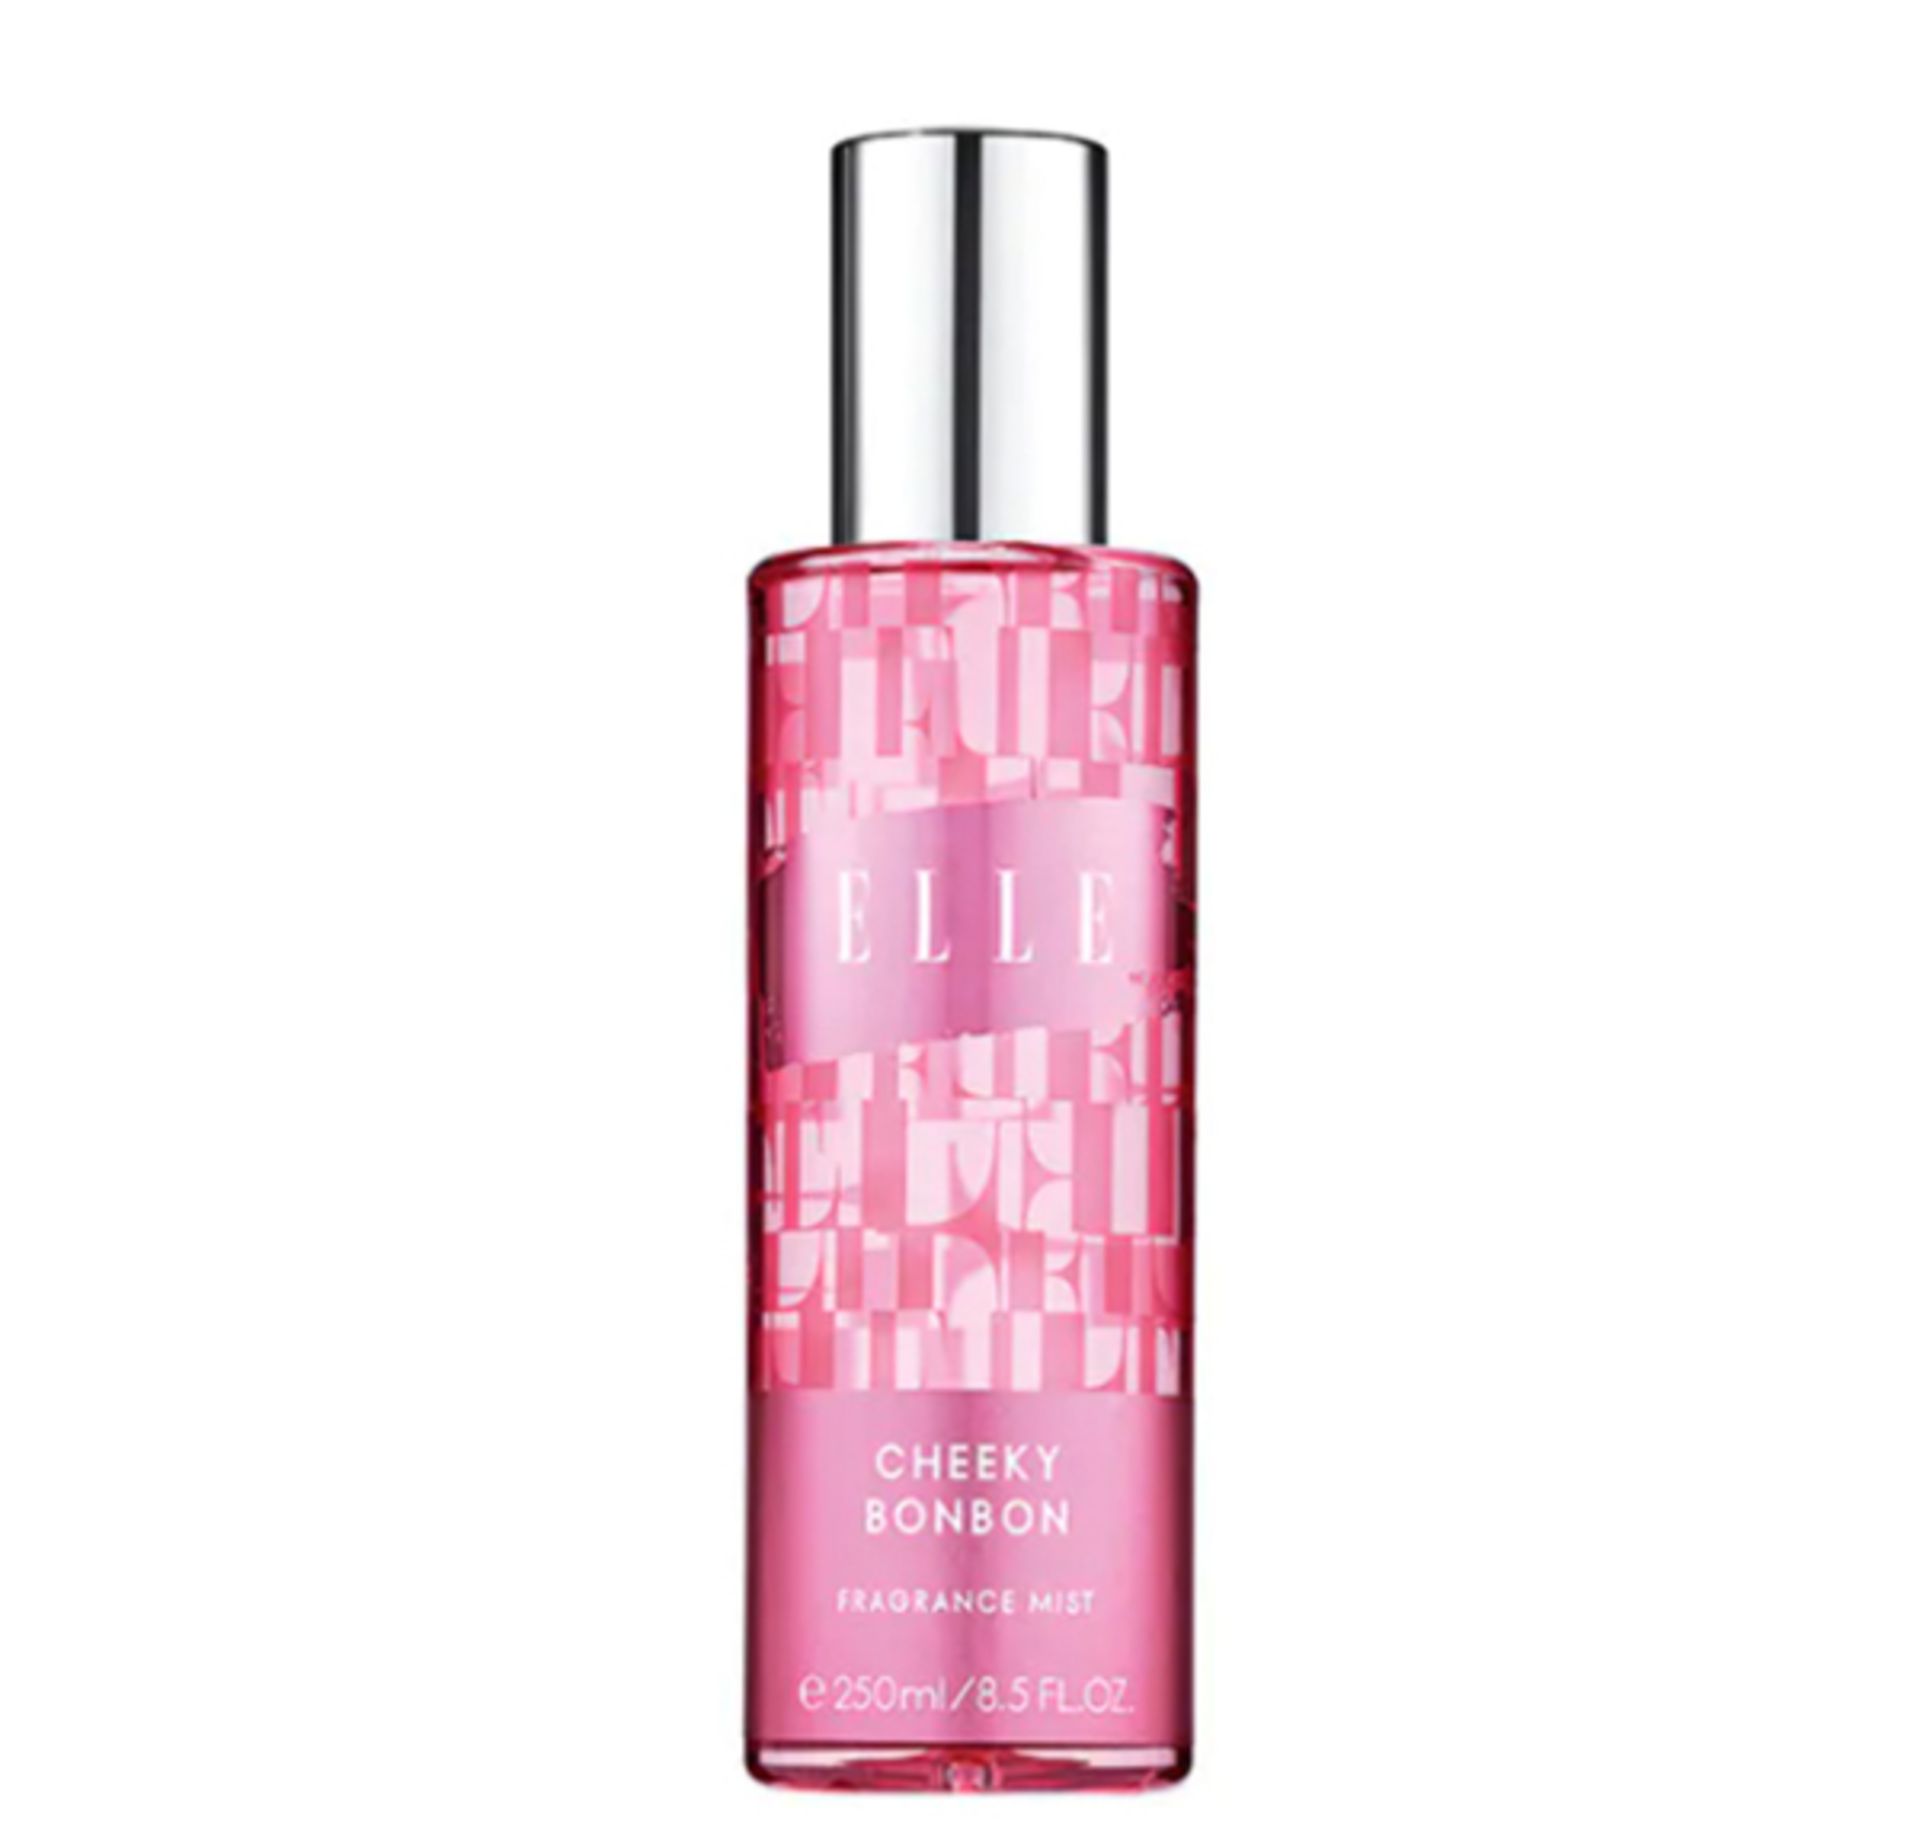 + VAT Brand New Elle Cheeky Bonbon 250ml Fragrances Mist